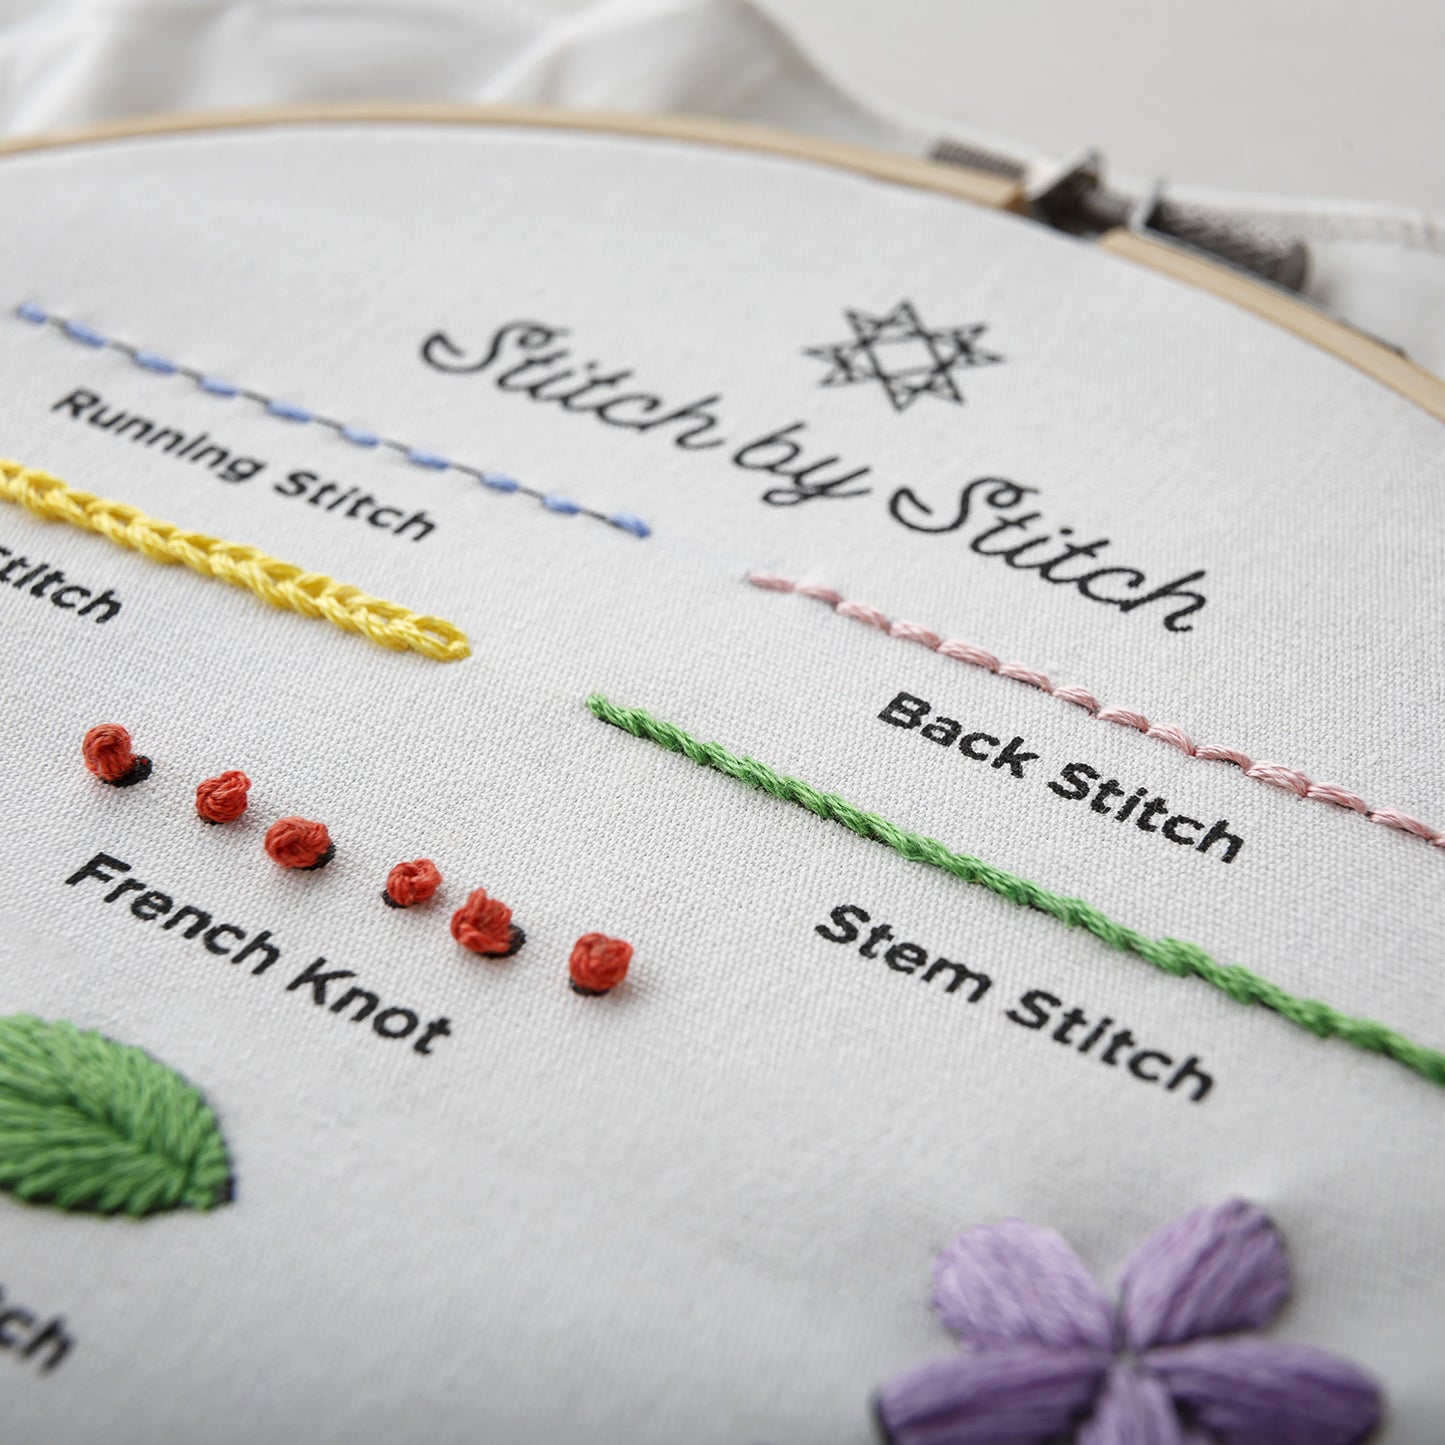 PREORDER - Learn Embroidery Stitch by Stitch with Missouri Star Alternative View #12